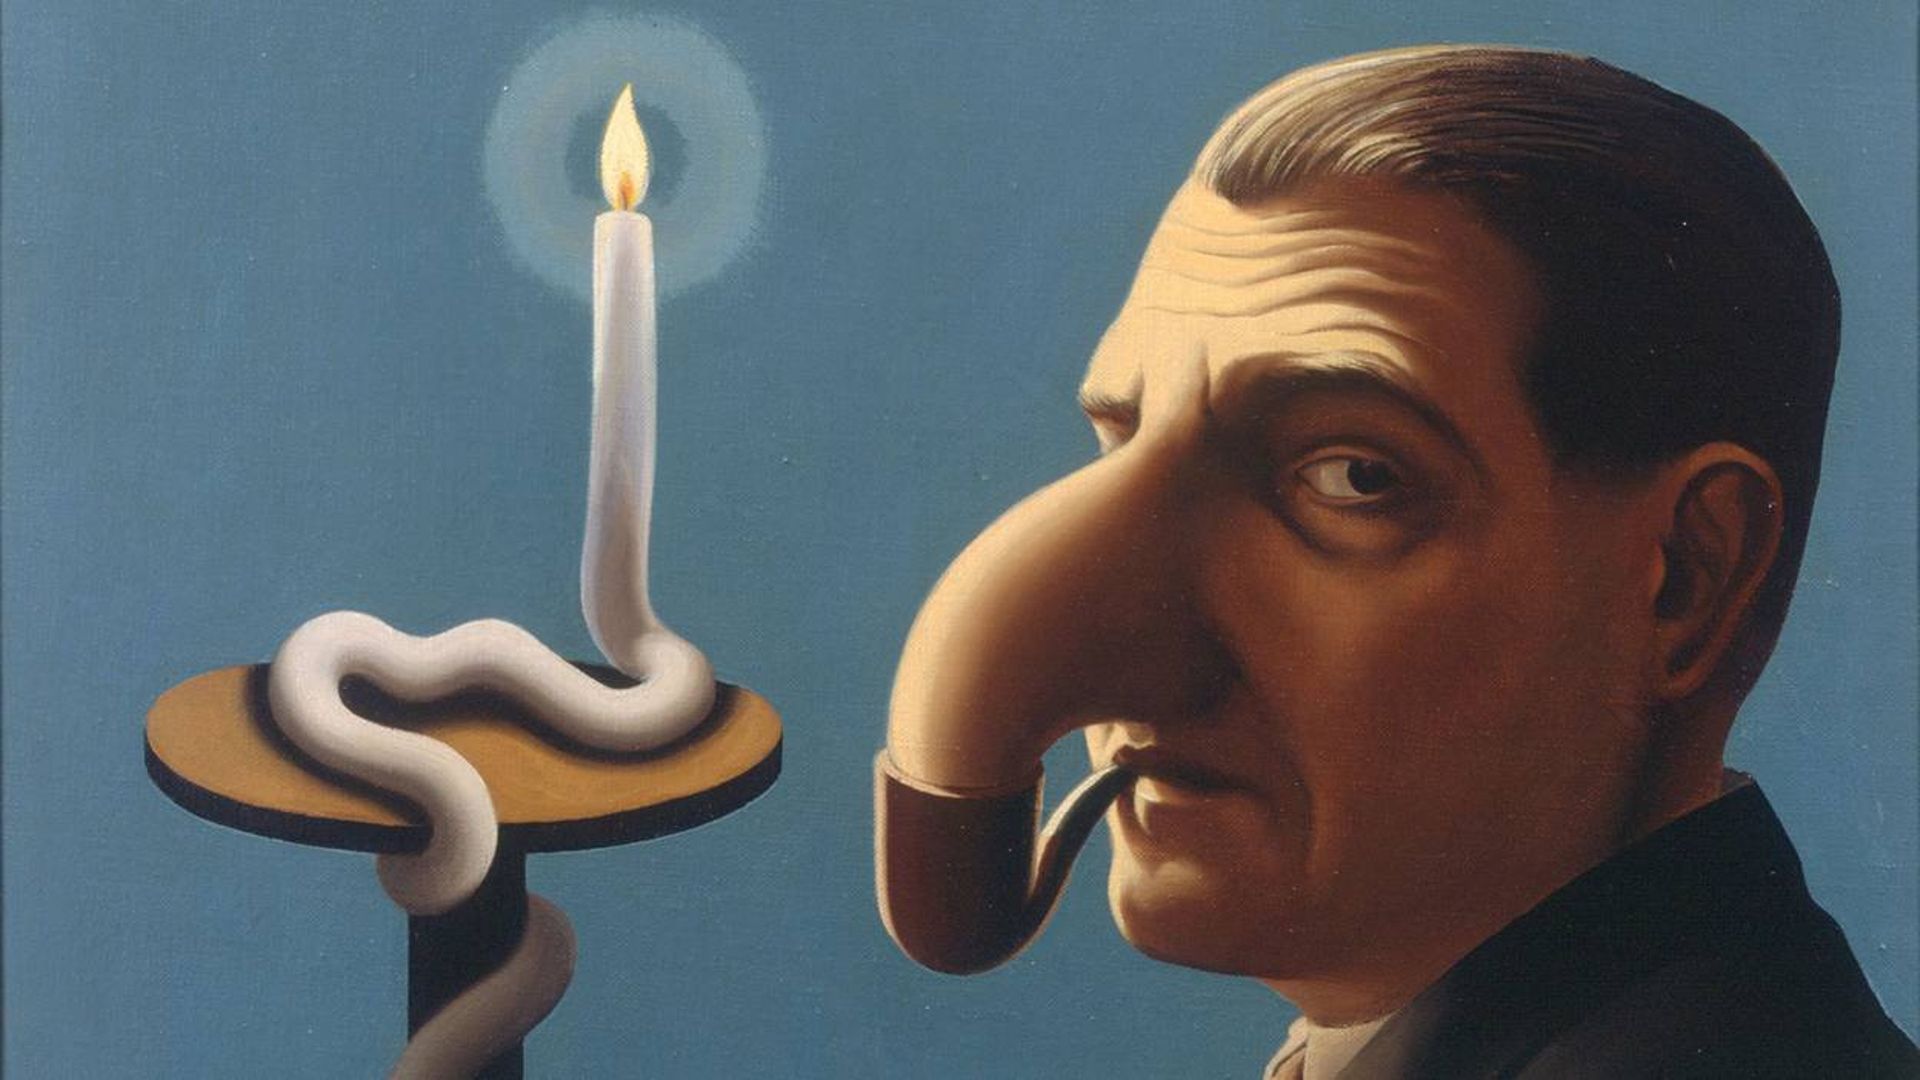 Vaste Exposition Dediee A Rene Magritte Prochainement Au Schirn Kunsthalle De Francfort